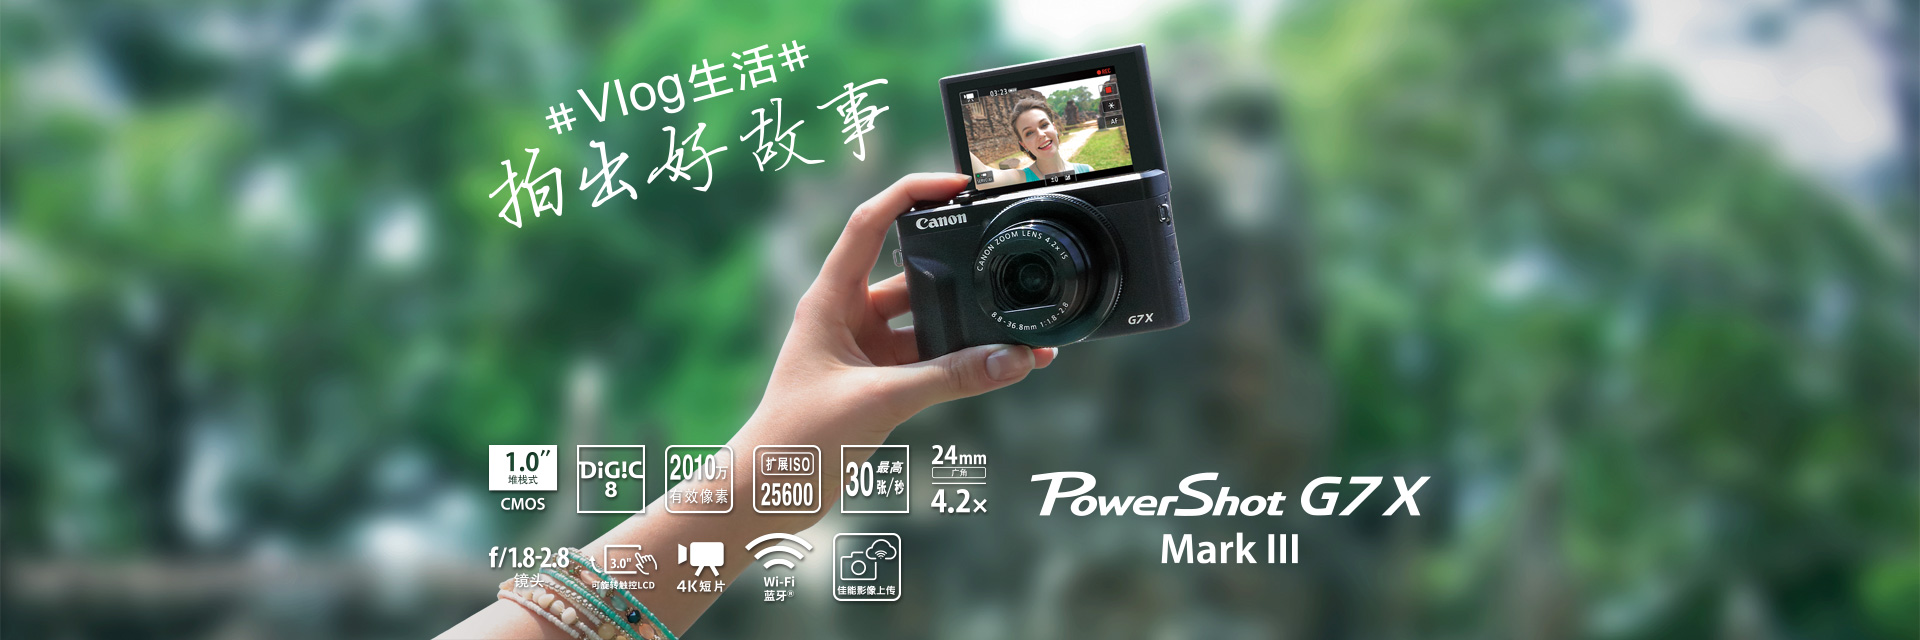 Canon 佳能G7X3 PowerShot G7 X Mark III 博秀数码相机正品便携1英寸高